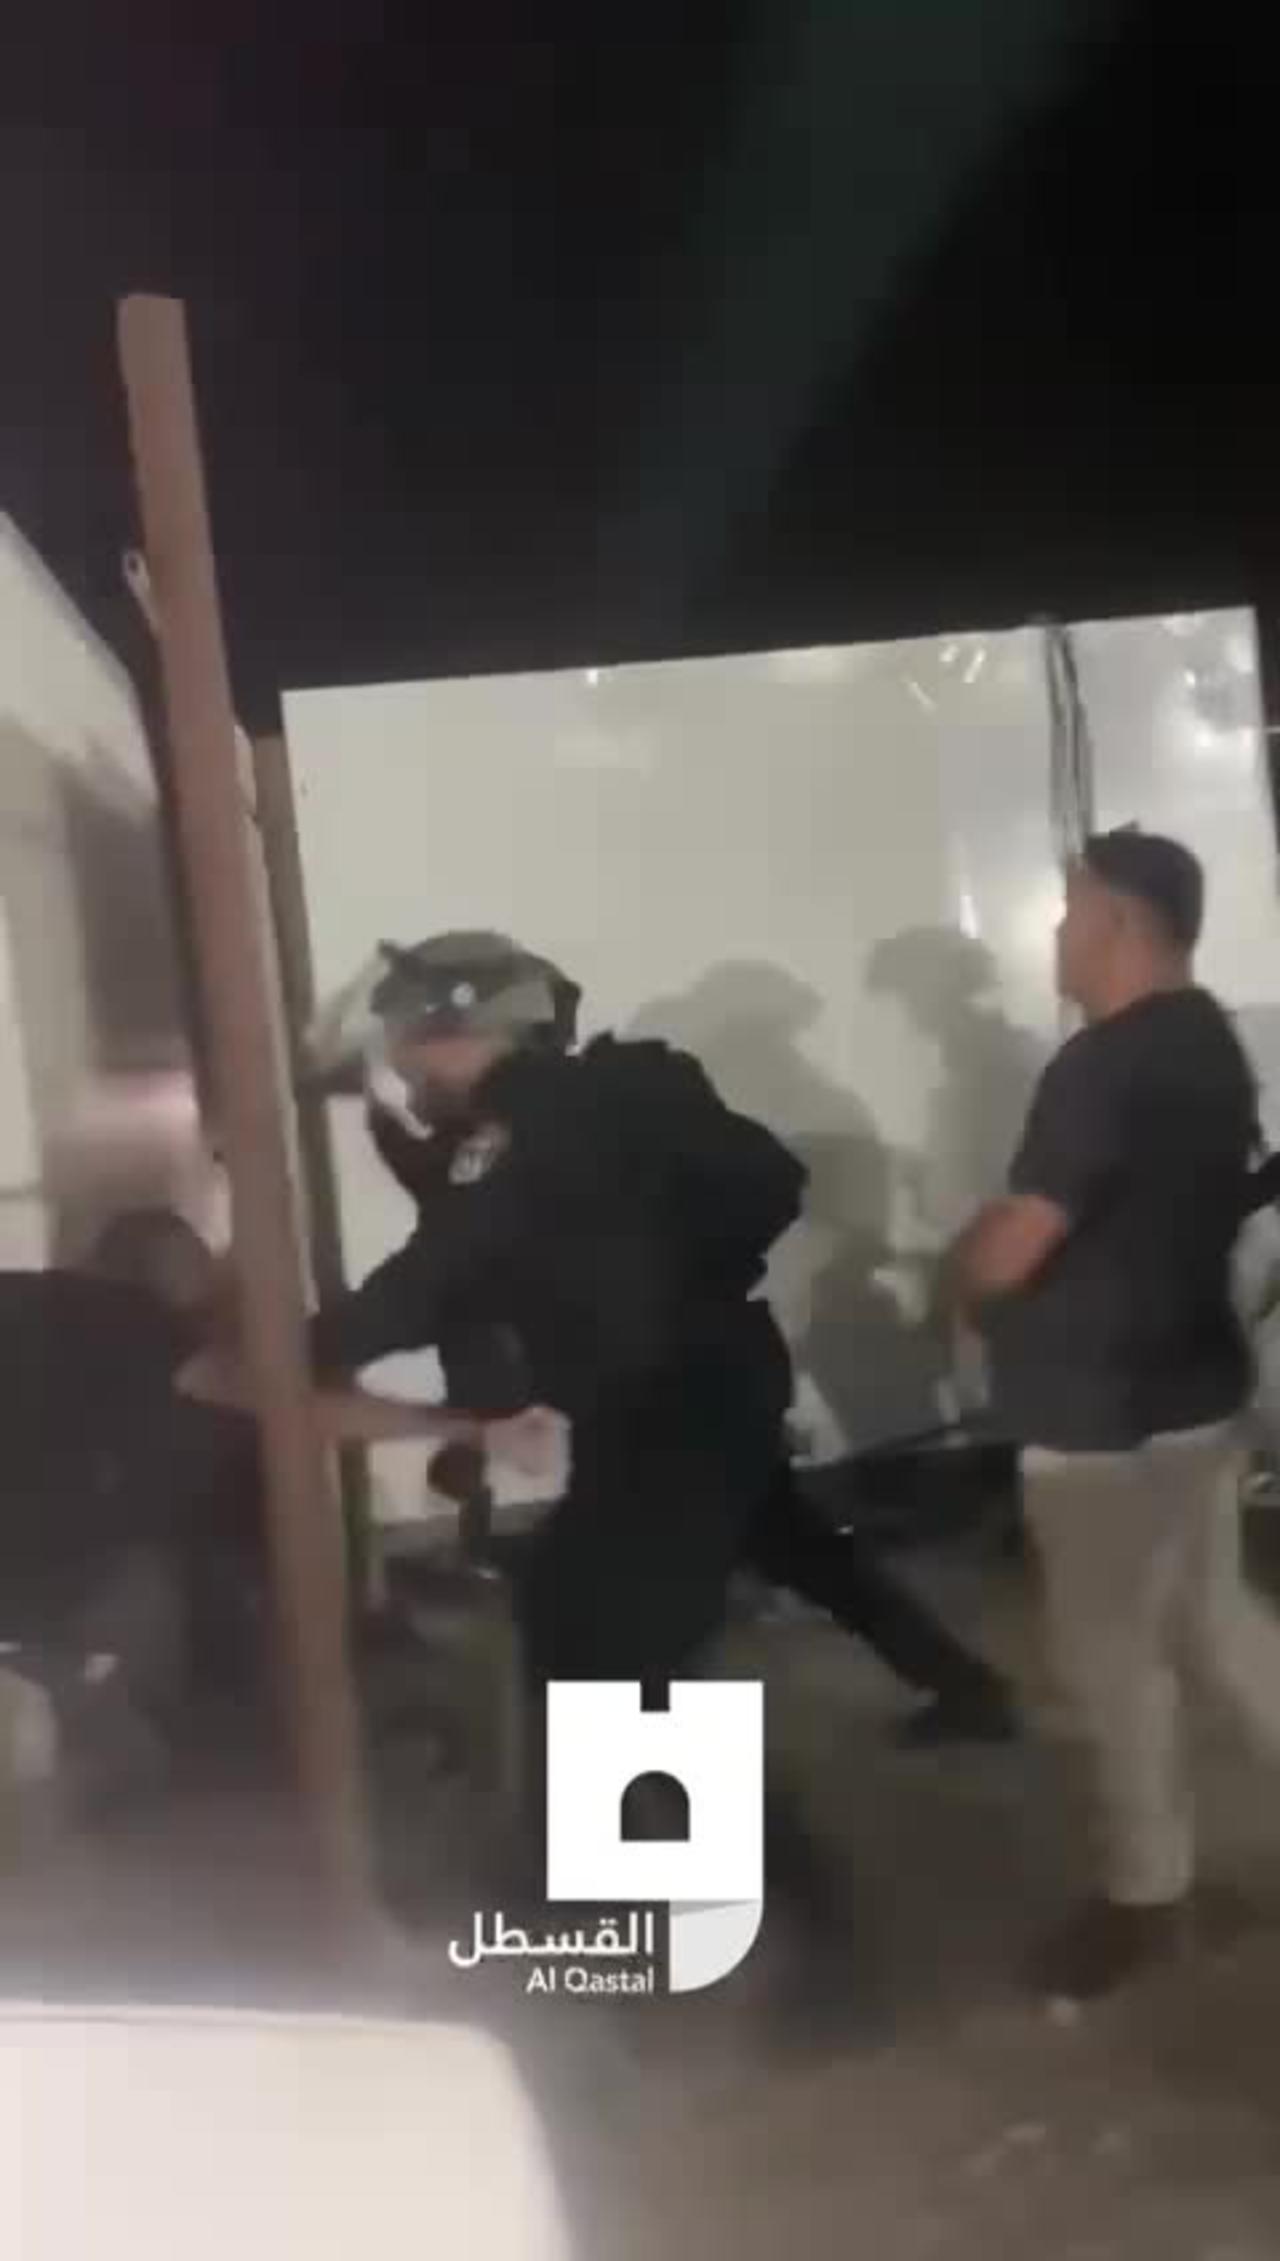 Israeli cowards attacking a Palestinian boy...